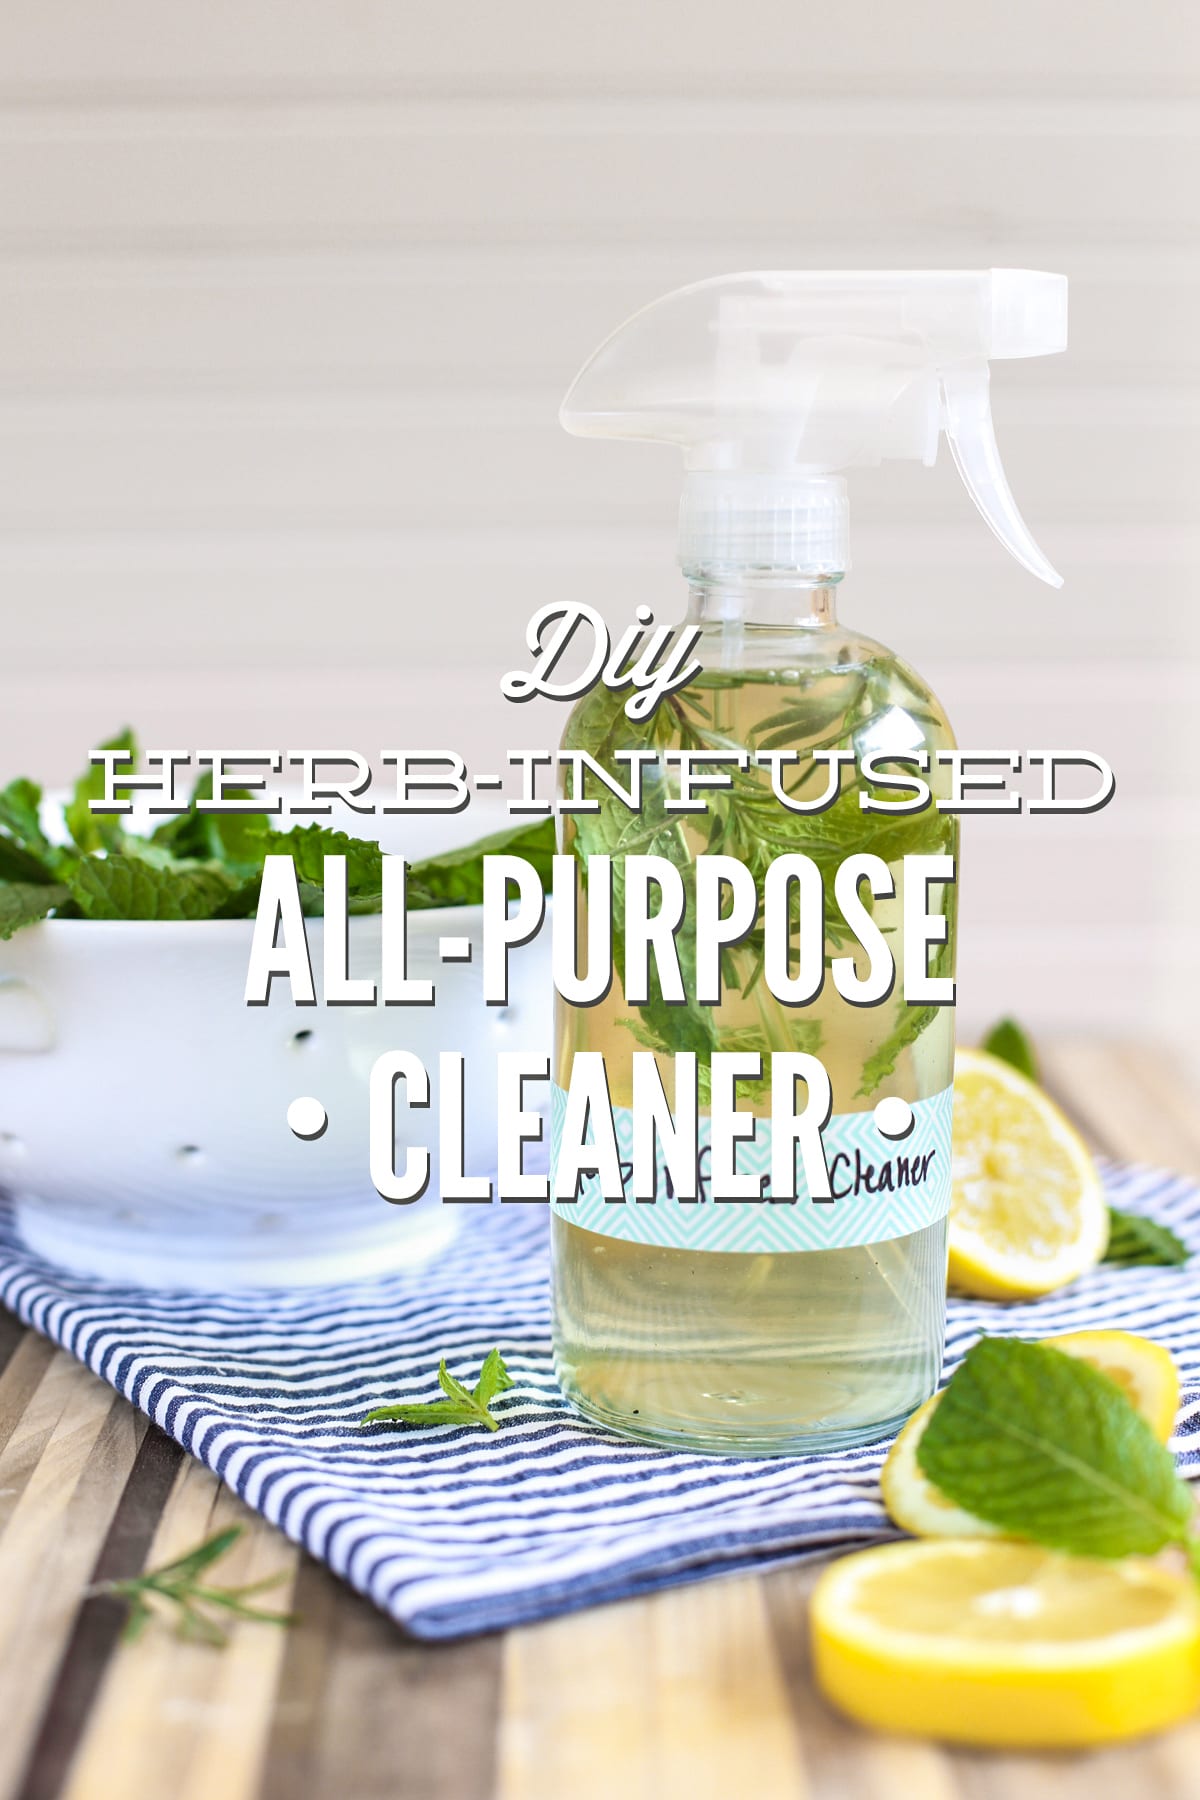 DIY Herb-Infused All-Purpose Cleaner